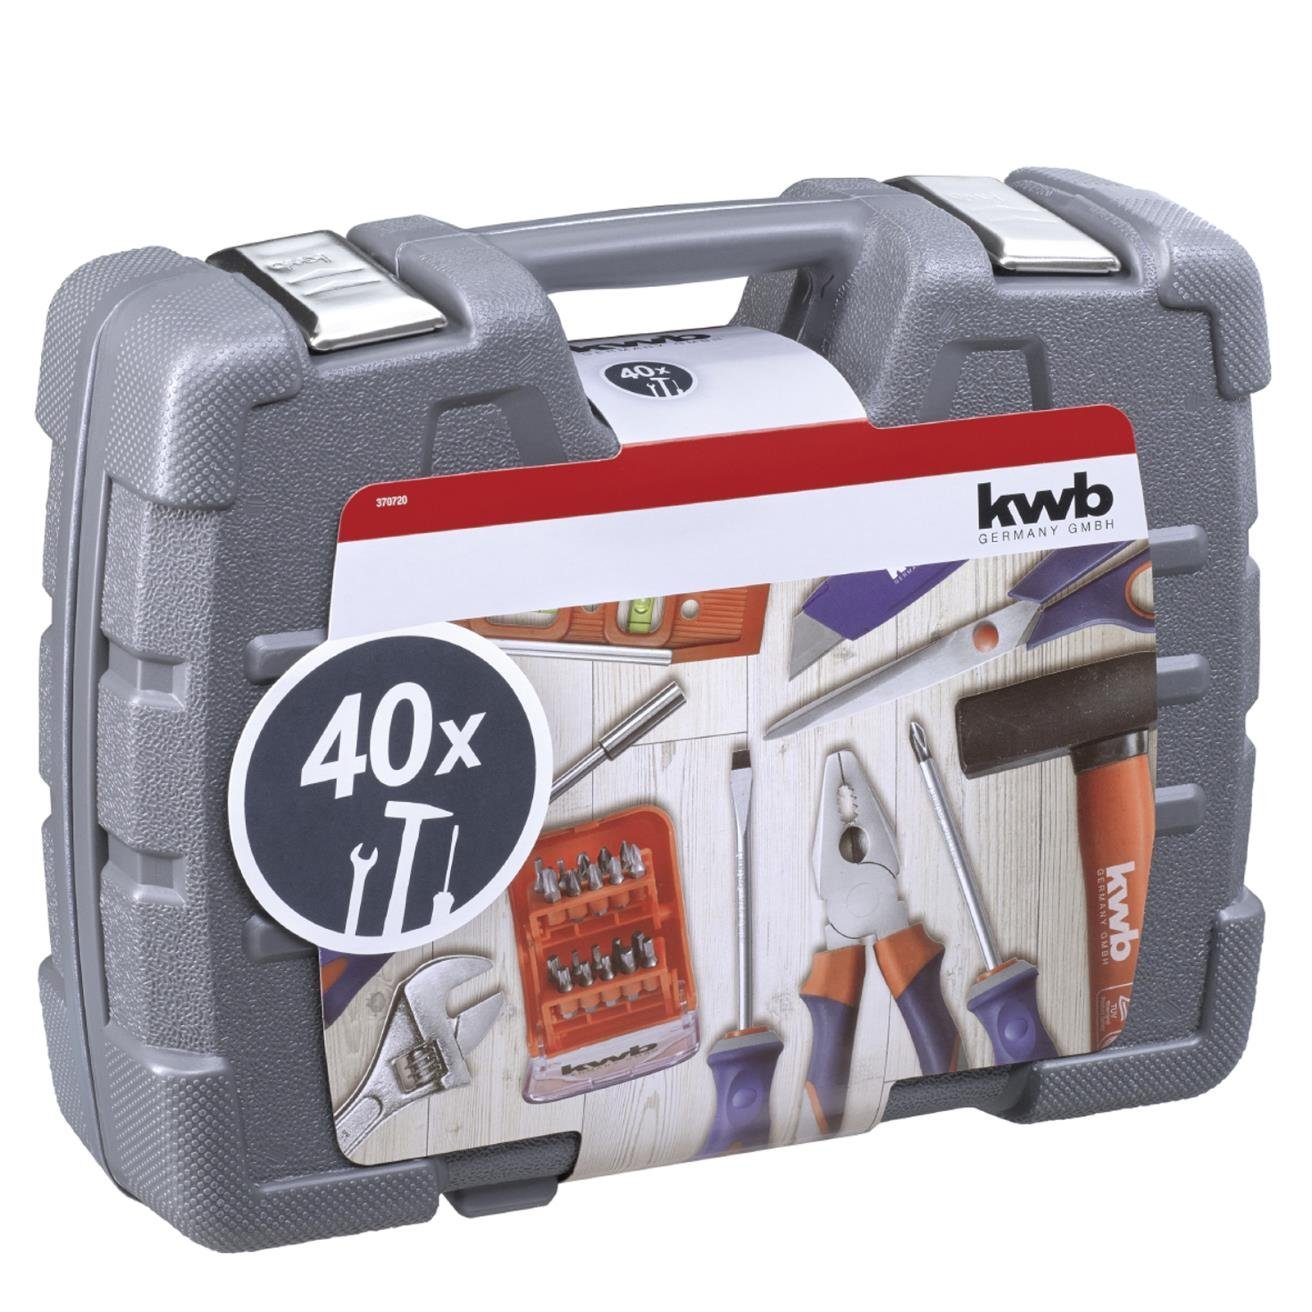 inkl. gefüllt, kwb robust, kwb Werkzeug-Set, Werkzeug-Koffer (Set) 40-teilig, Werkzeugset